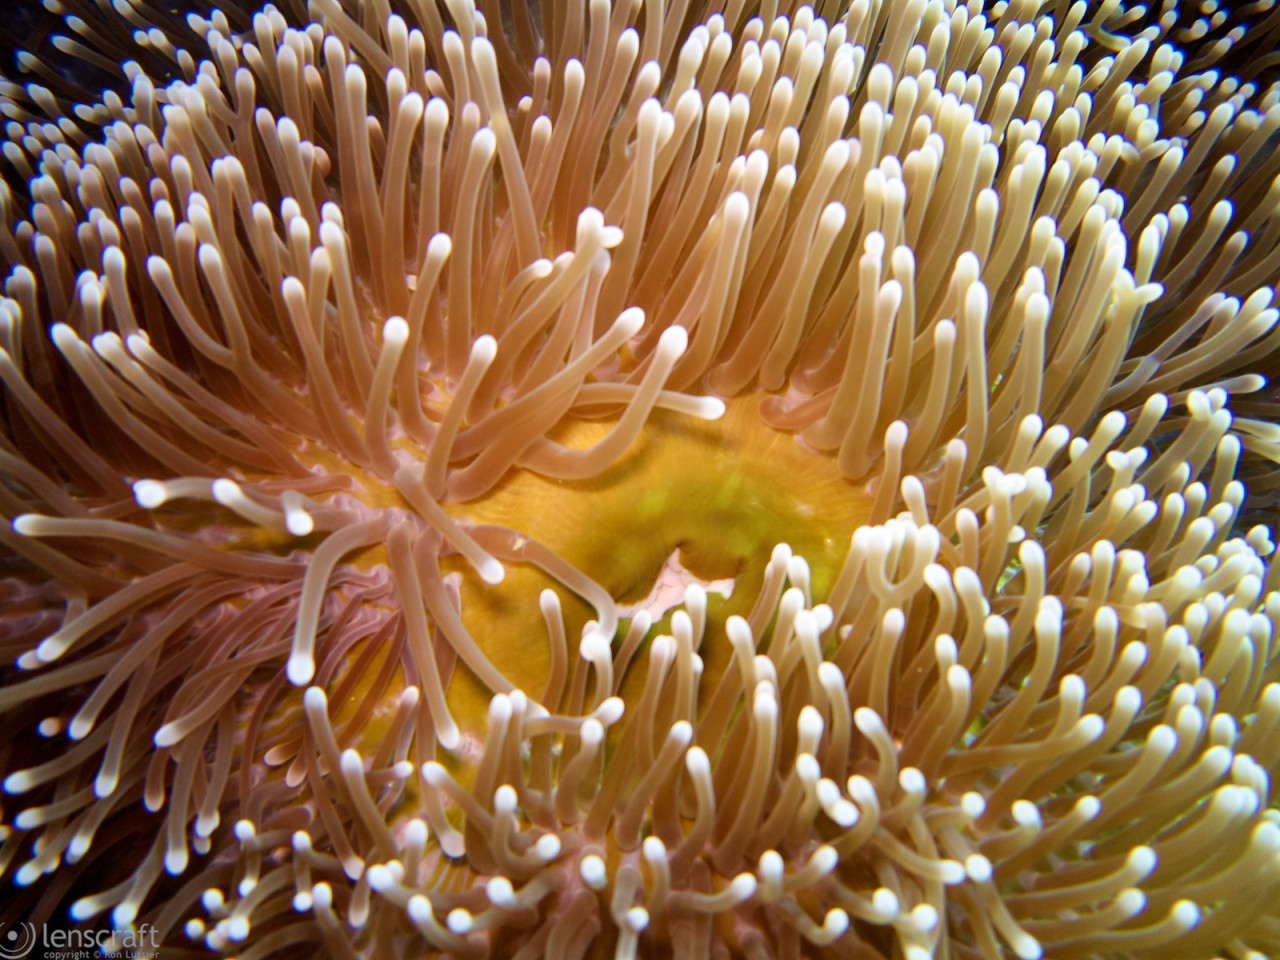 anemone / yap, micronesia